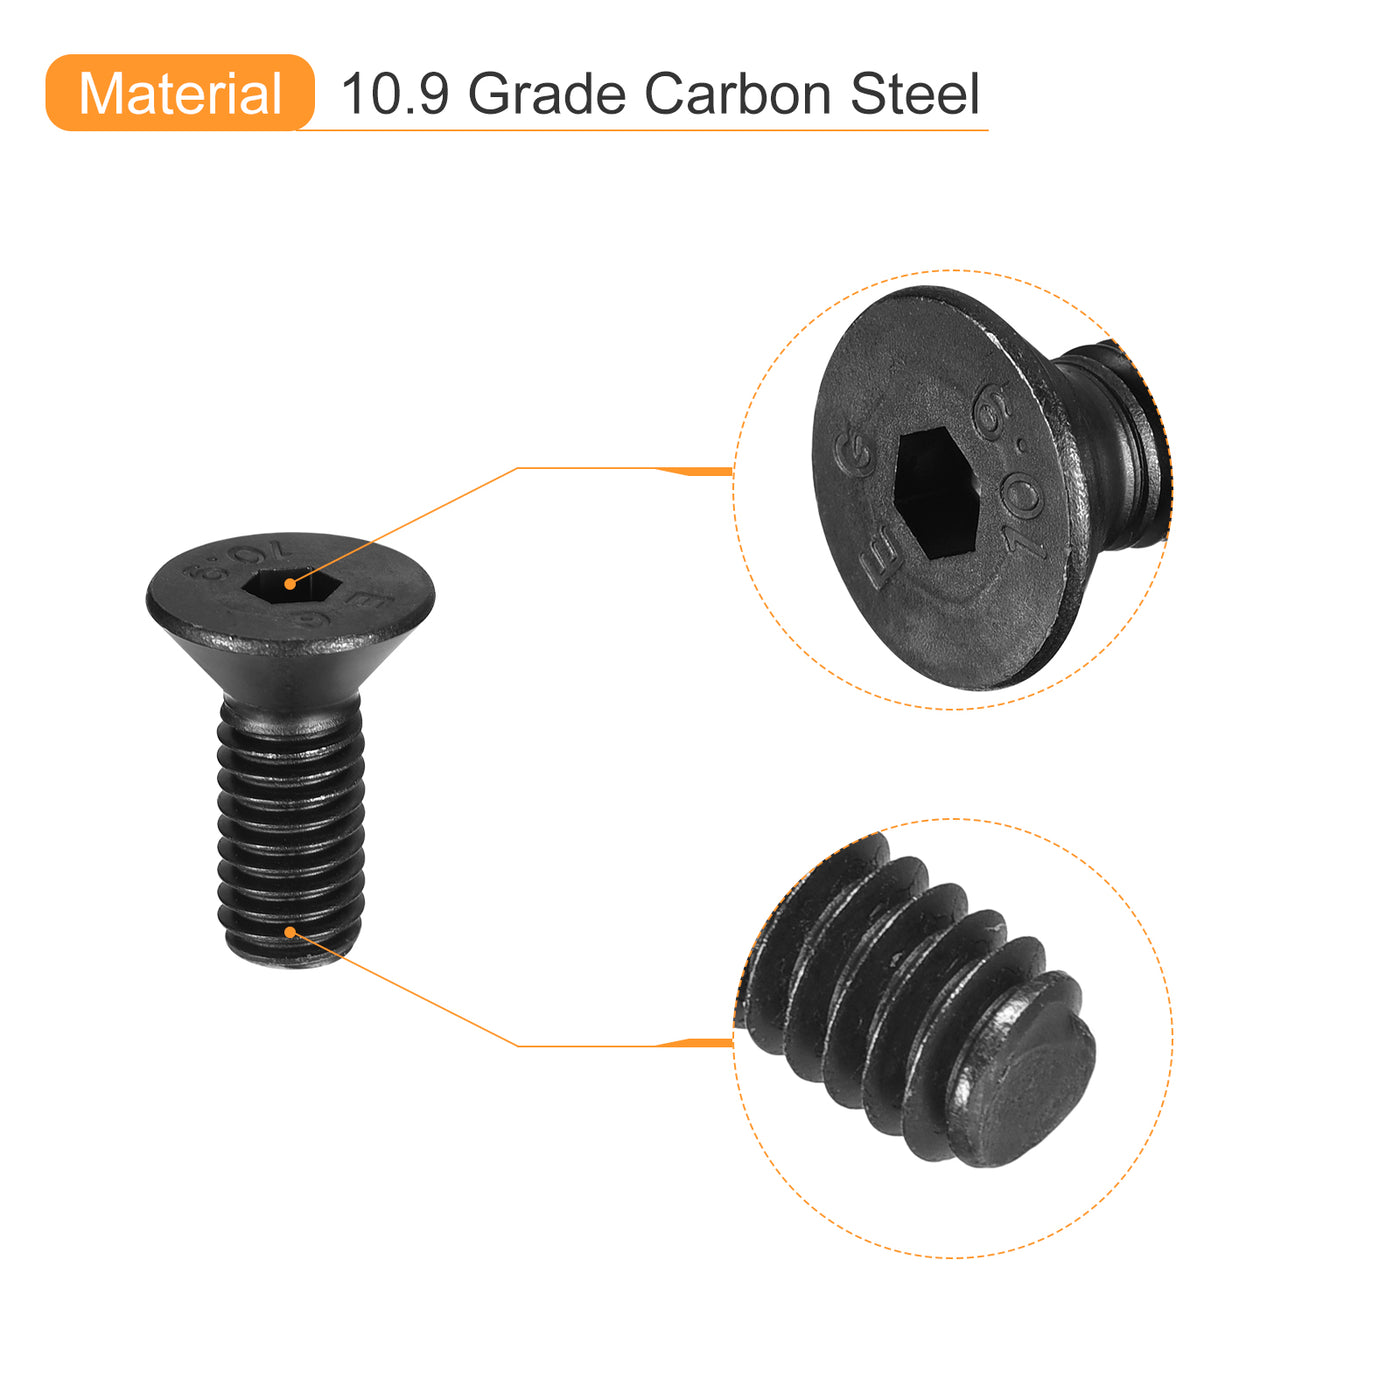 uxcell Uxcell 3/8-16x1" Flat Head Socket Cap Screws, 10.9 Grade Carbon Steel, 10PCS